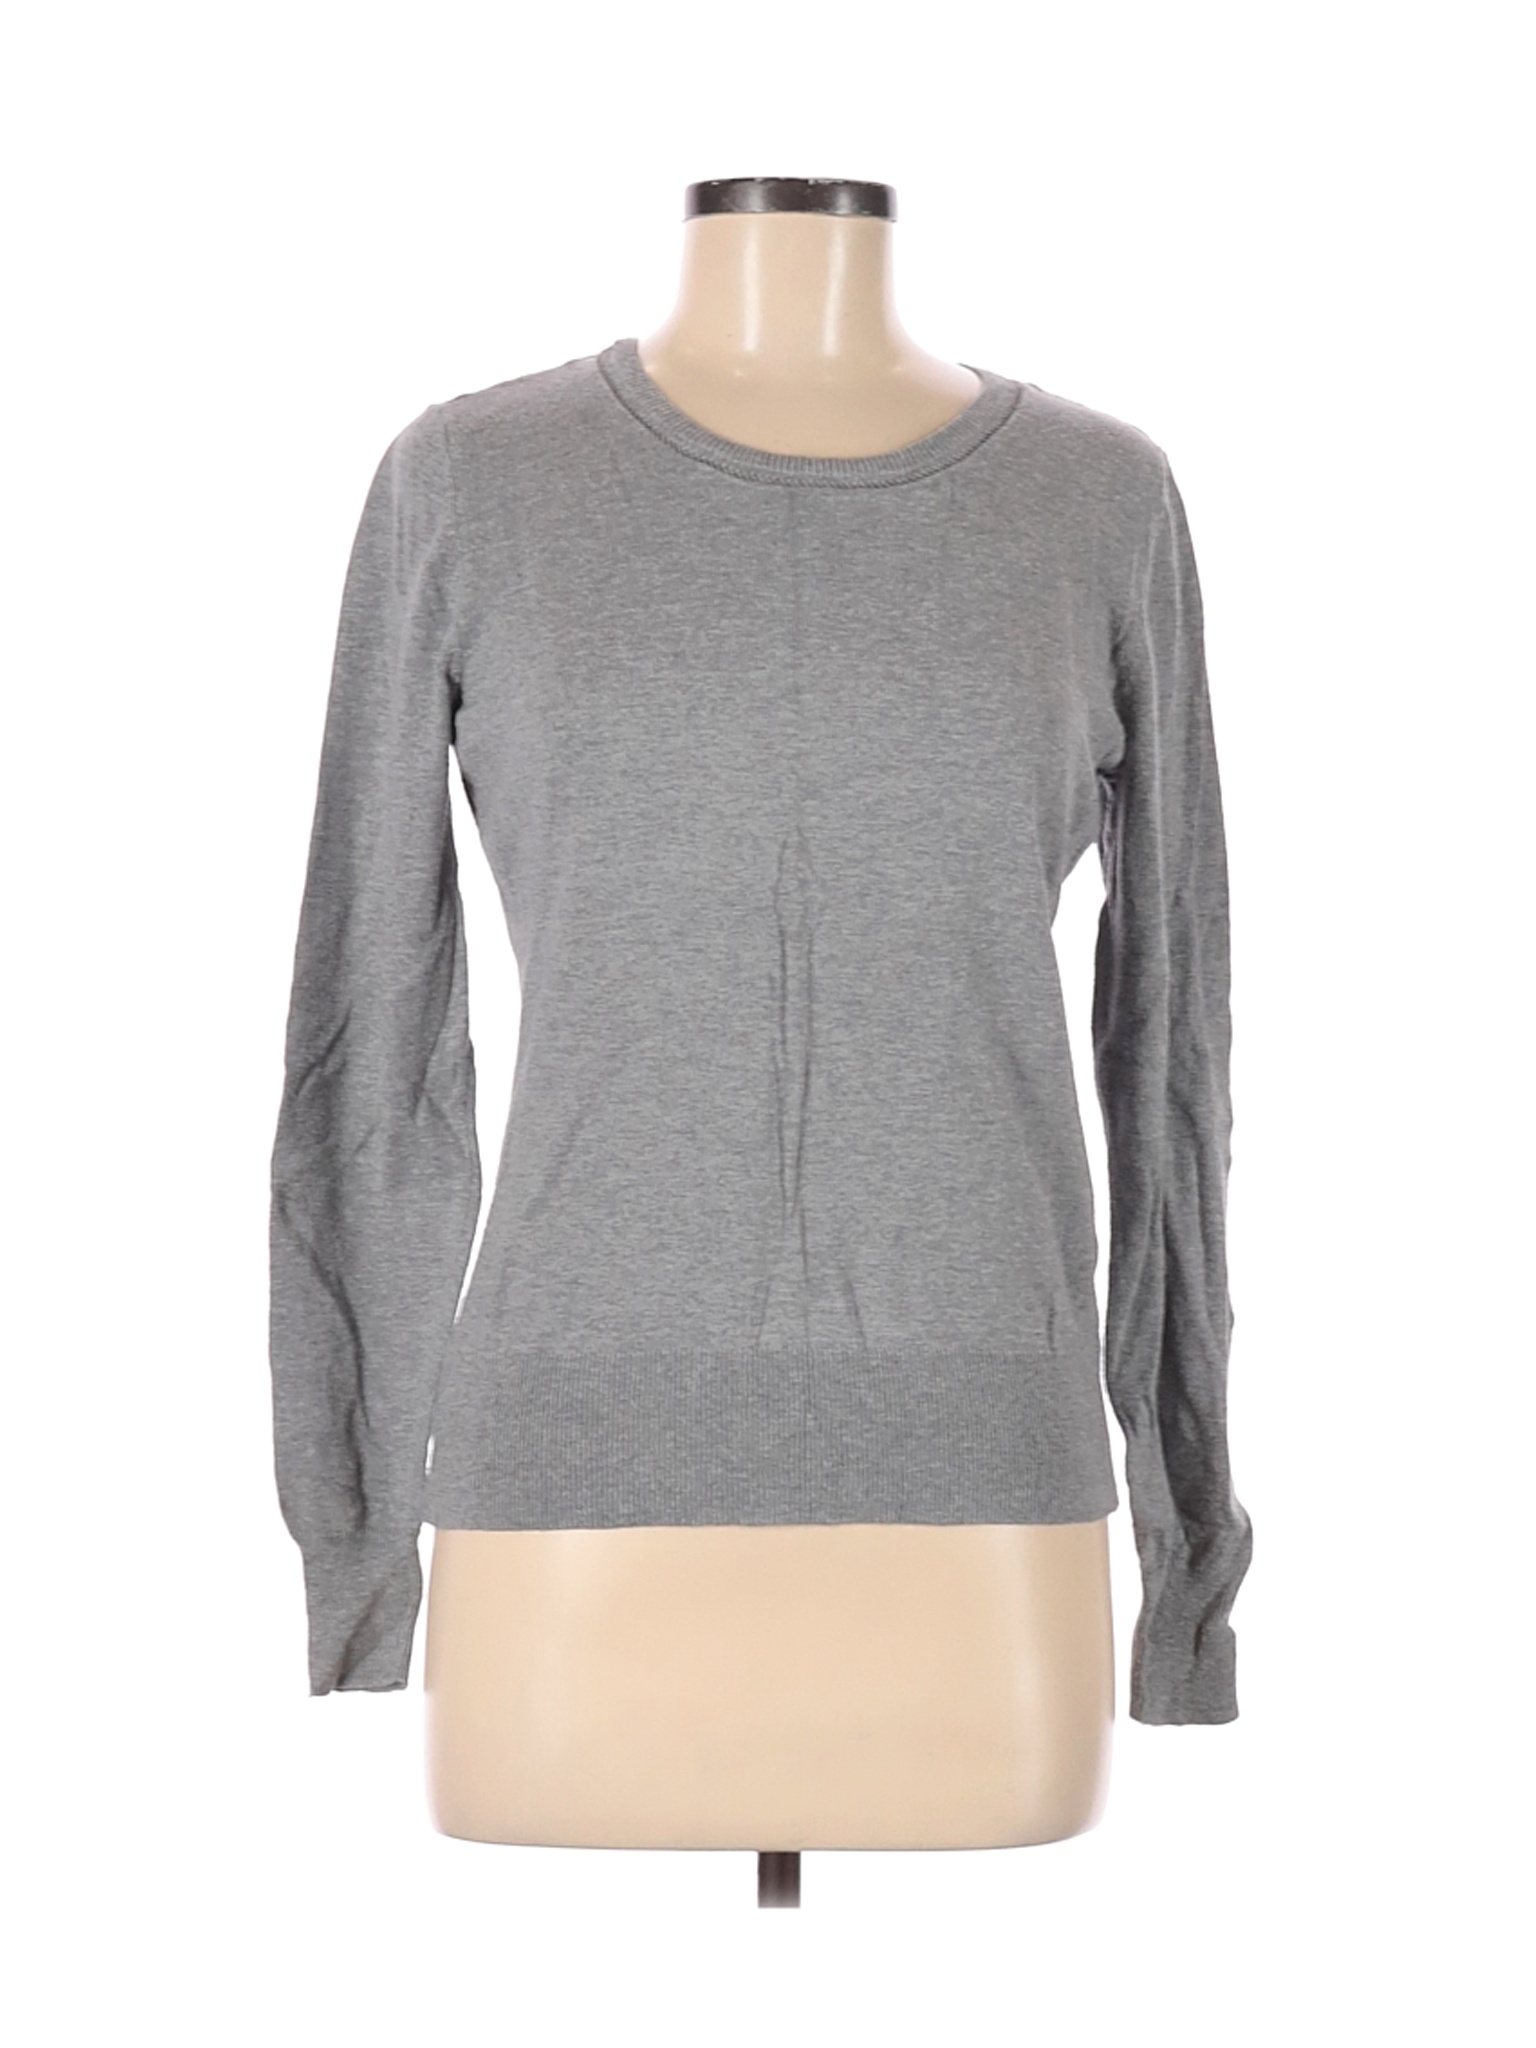 Worthington Women Gray Pullover Sweater M | eBay